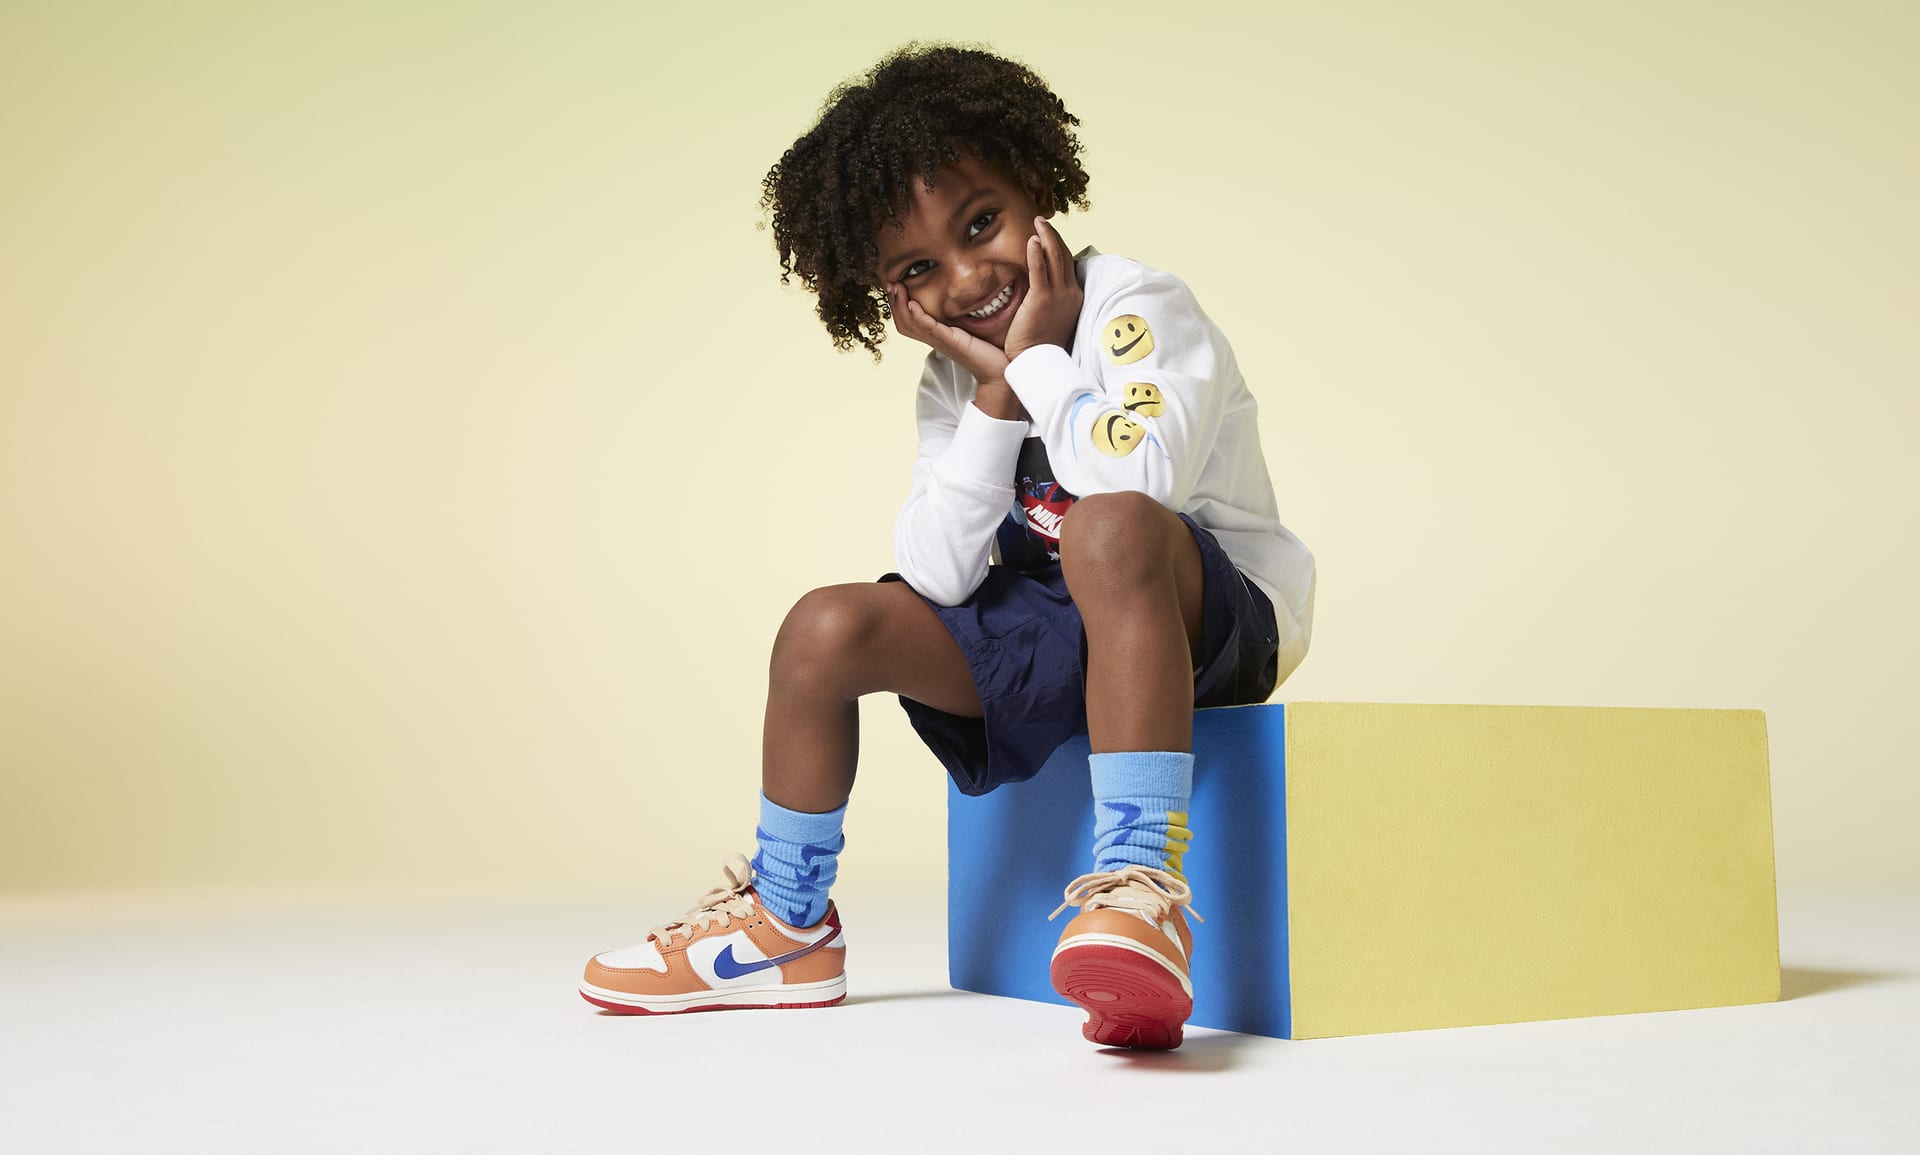 Nike Dunk Low Little Kids' Shoes.